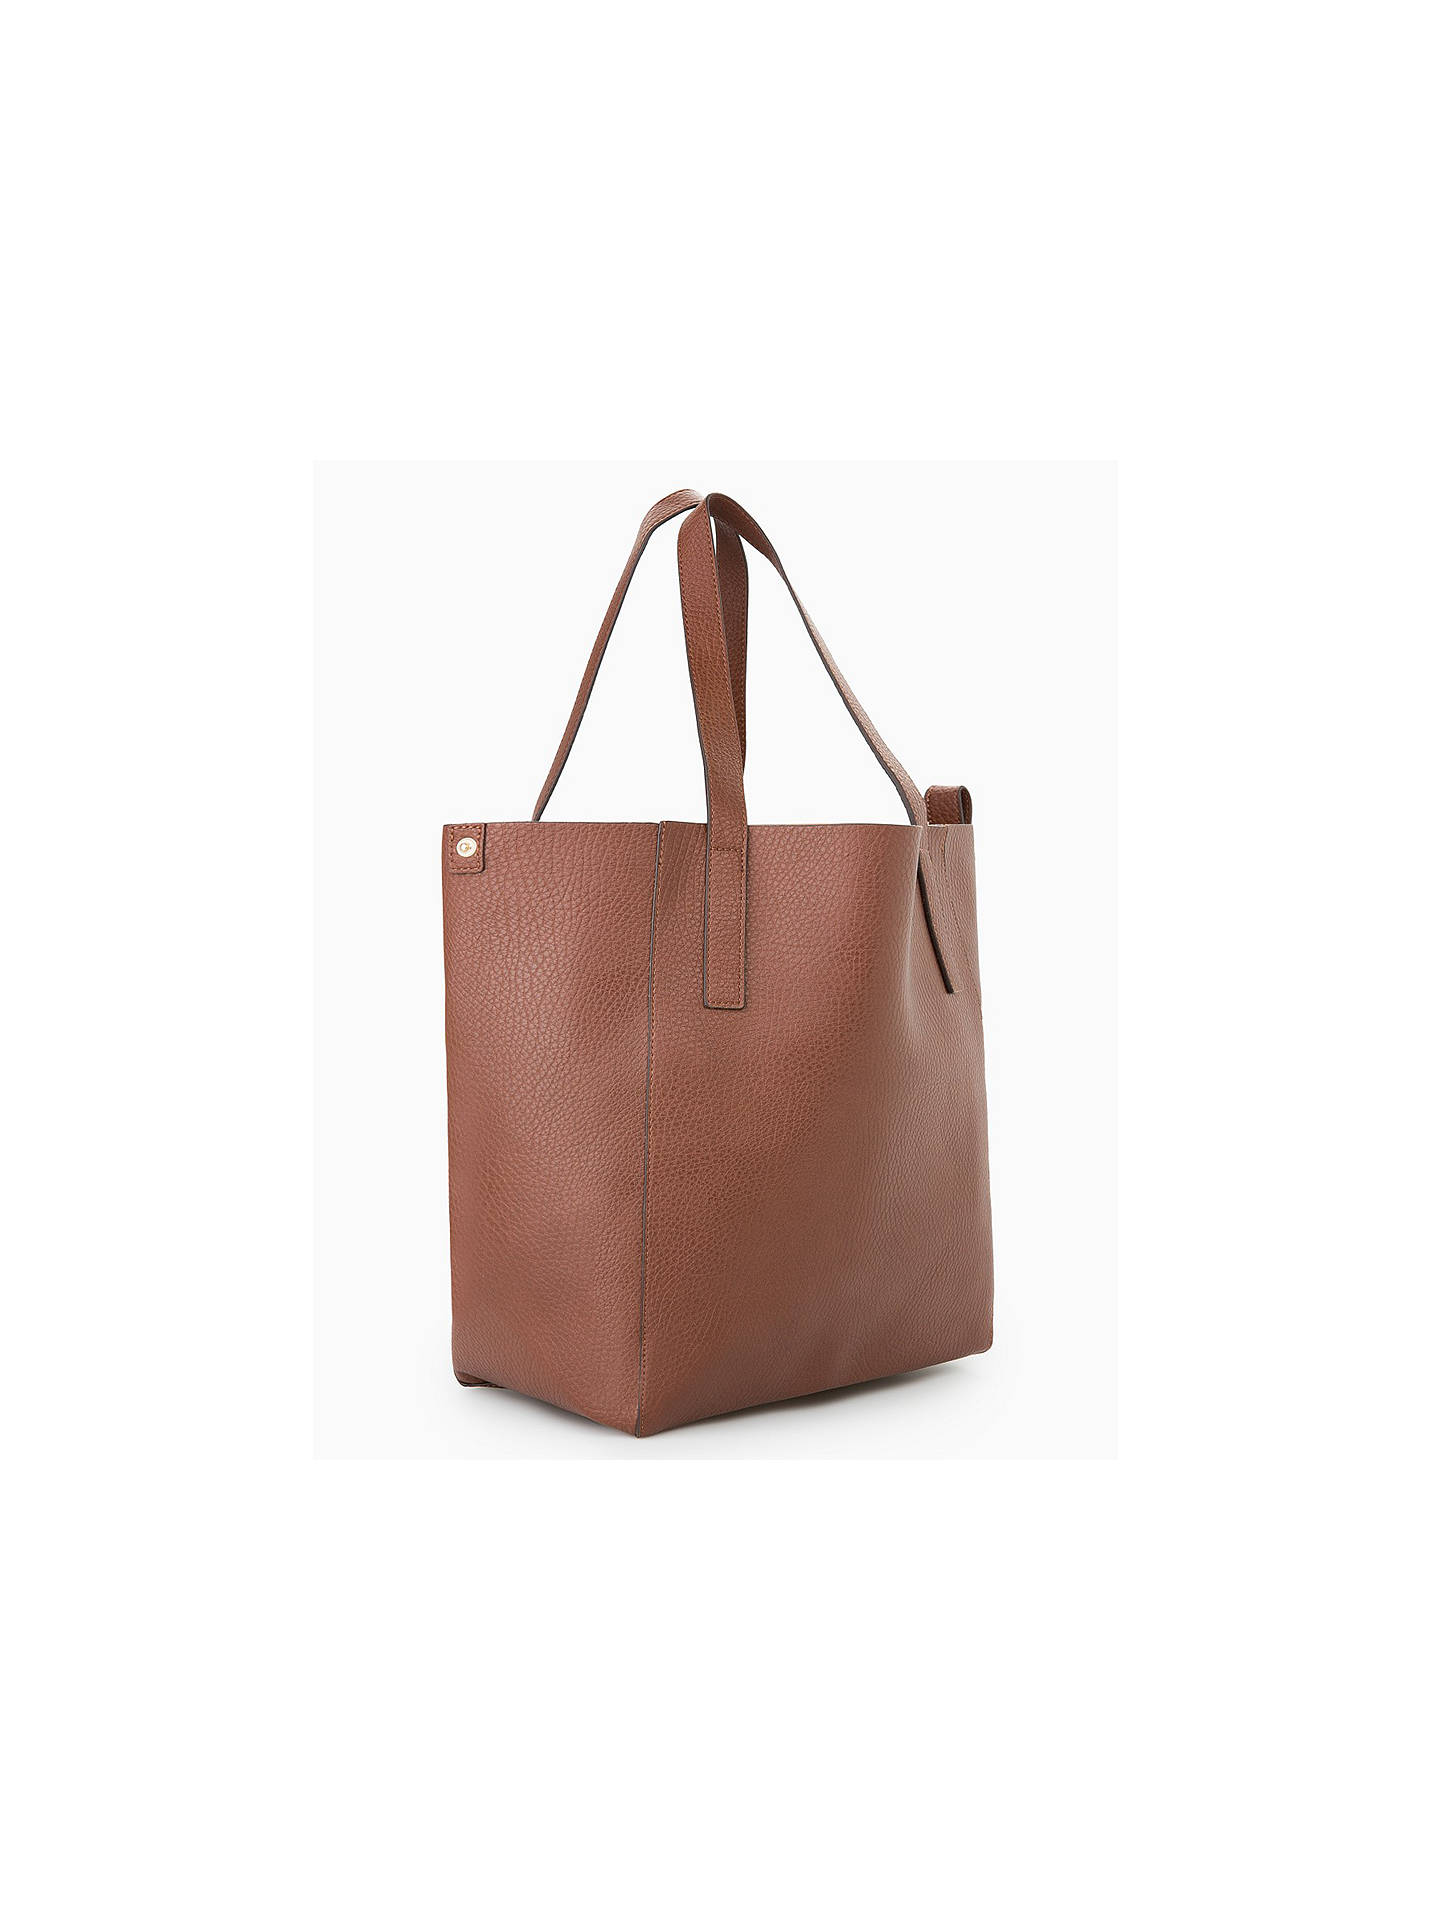 Mango Faux Leather Shopper Bag at John Lewis & Partners